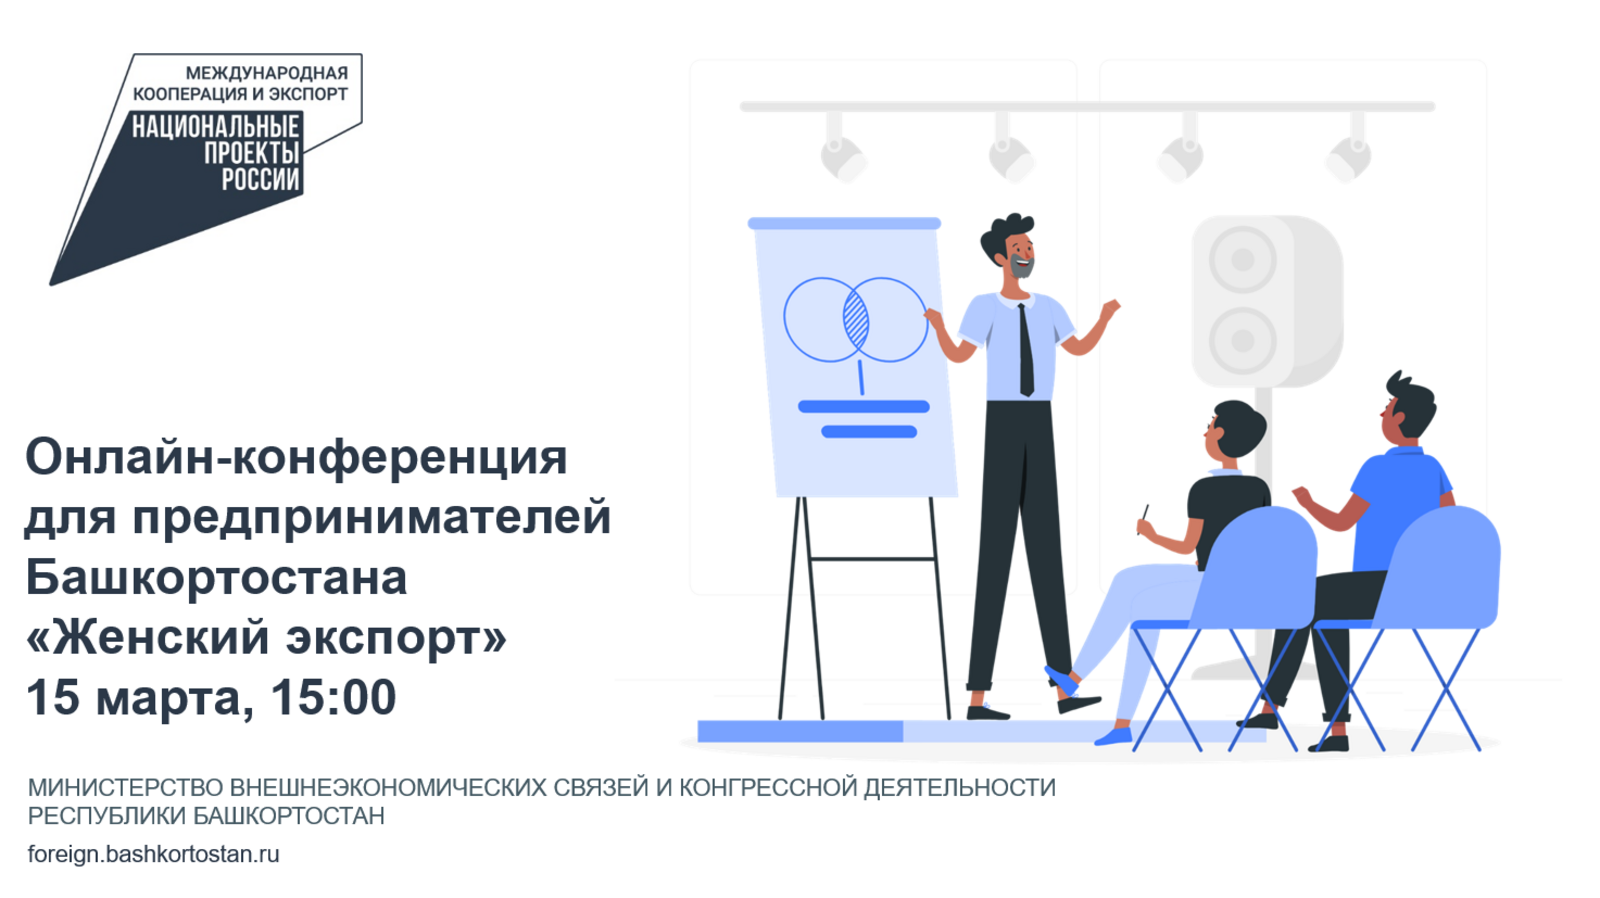 Экспортеры Башкортостана приглашаются на онлайн-конференцию «Женский экспорт»